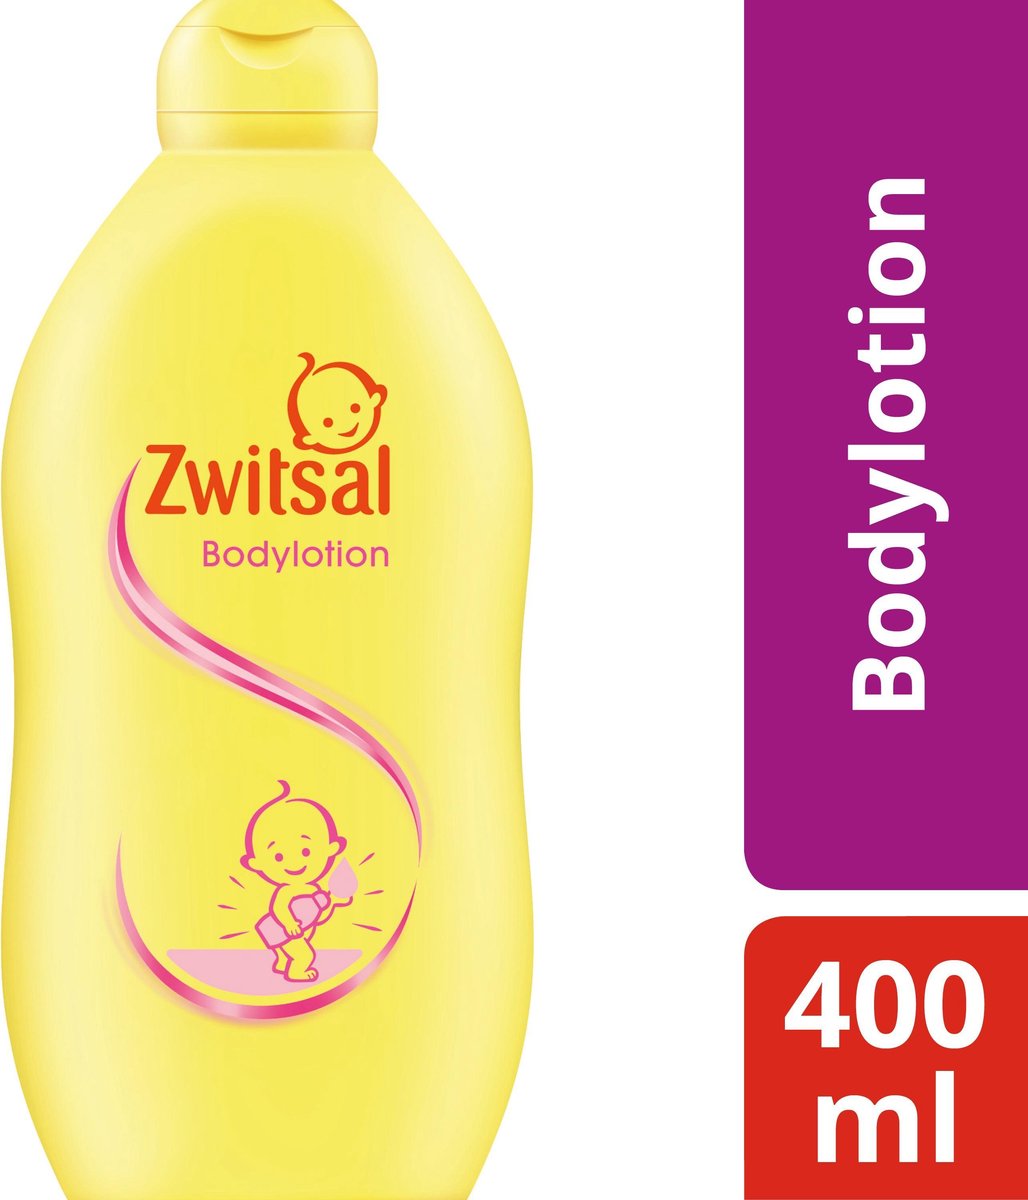 Zeebrasem Sentimenteel Vriend Zwitsal Bodylotion 400ML | bol.com